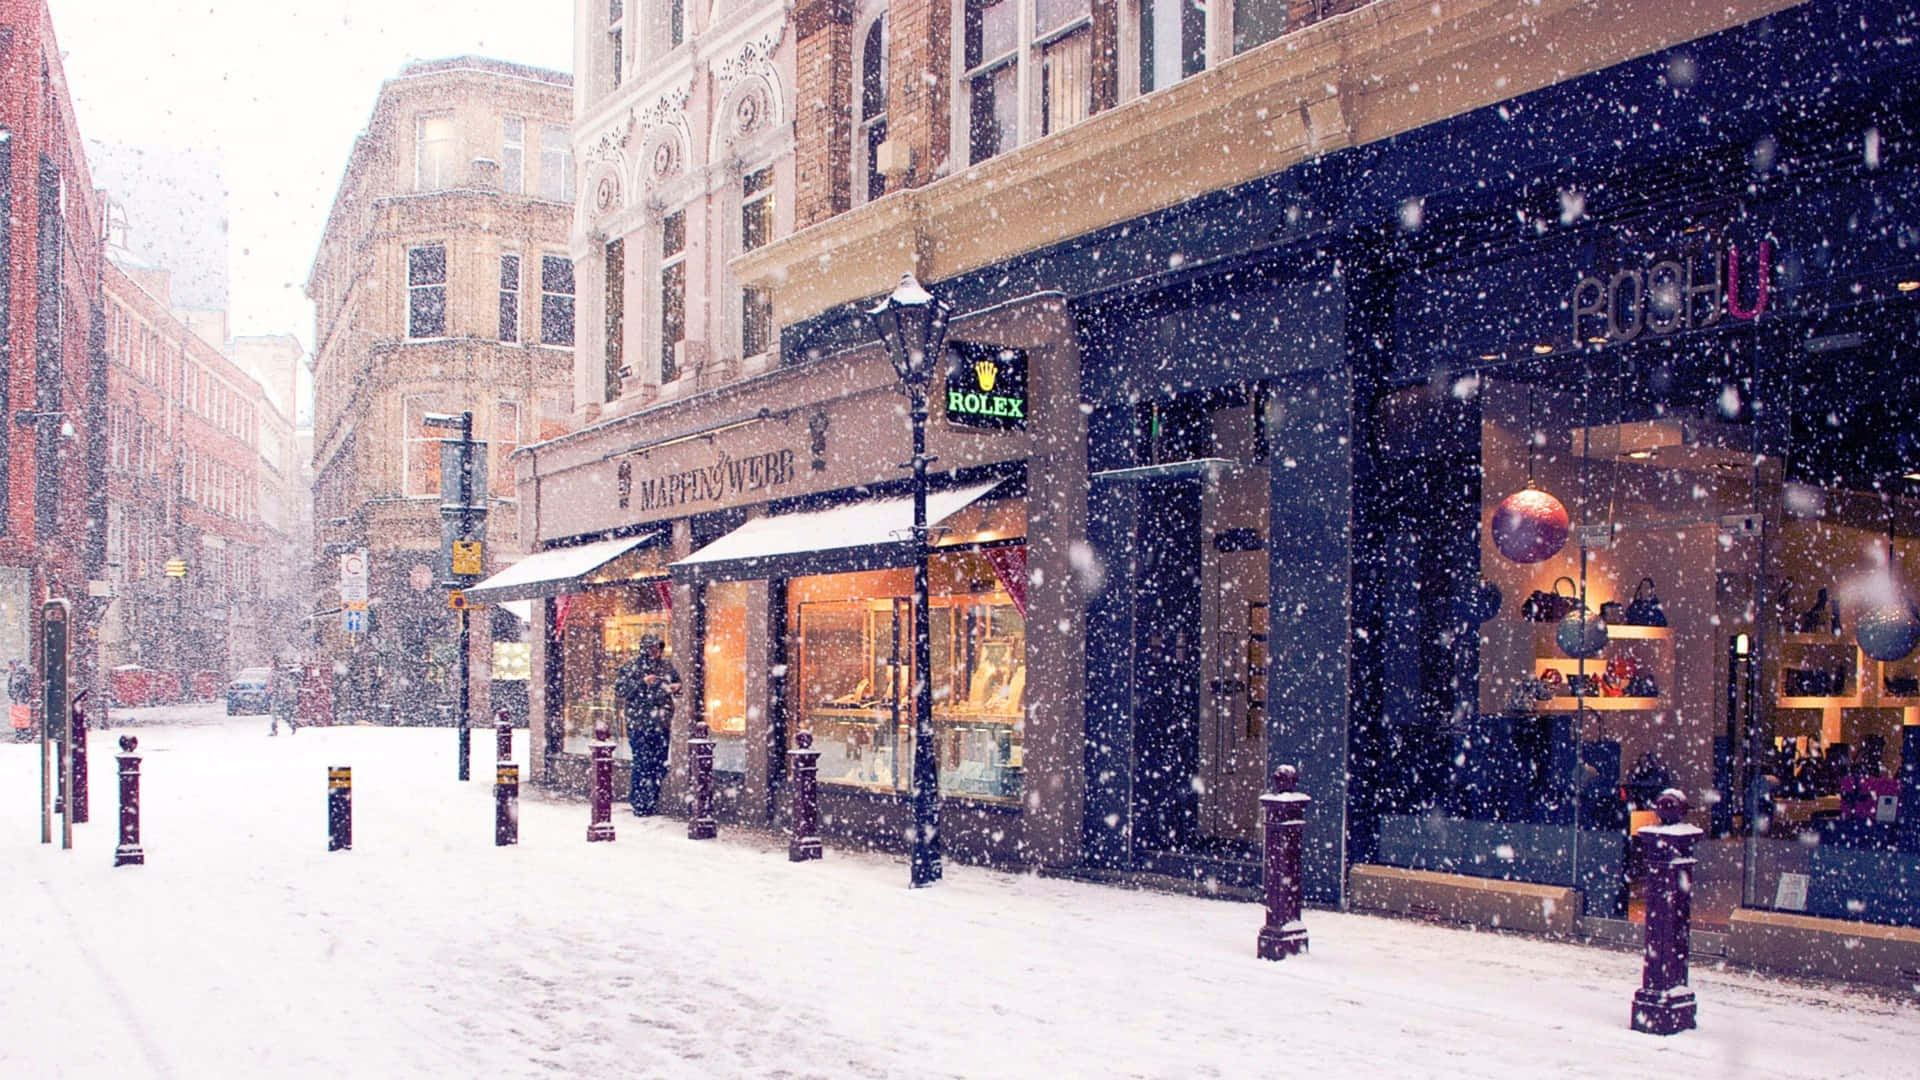 Snowy_ City_ Street_with_ Luxury_ Shops_ Vintage_ Winter_ Aesthetic.jpg Wallpaper